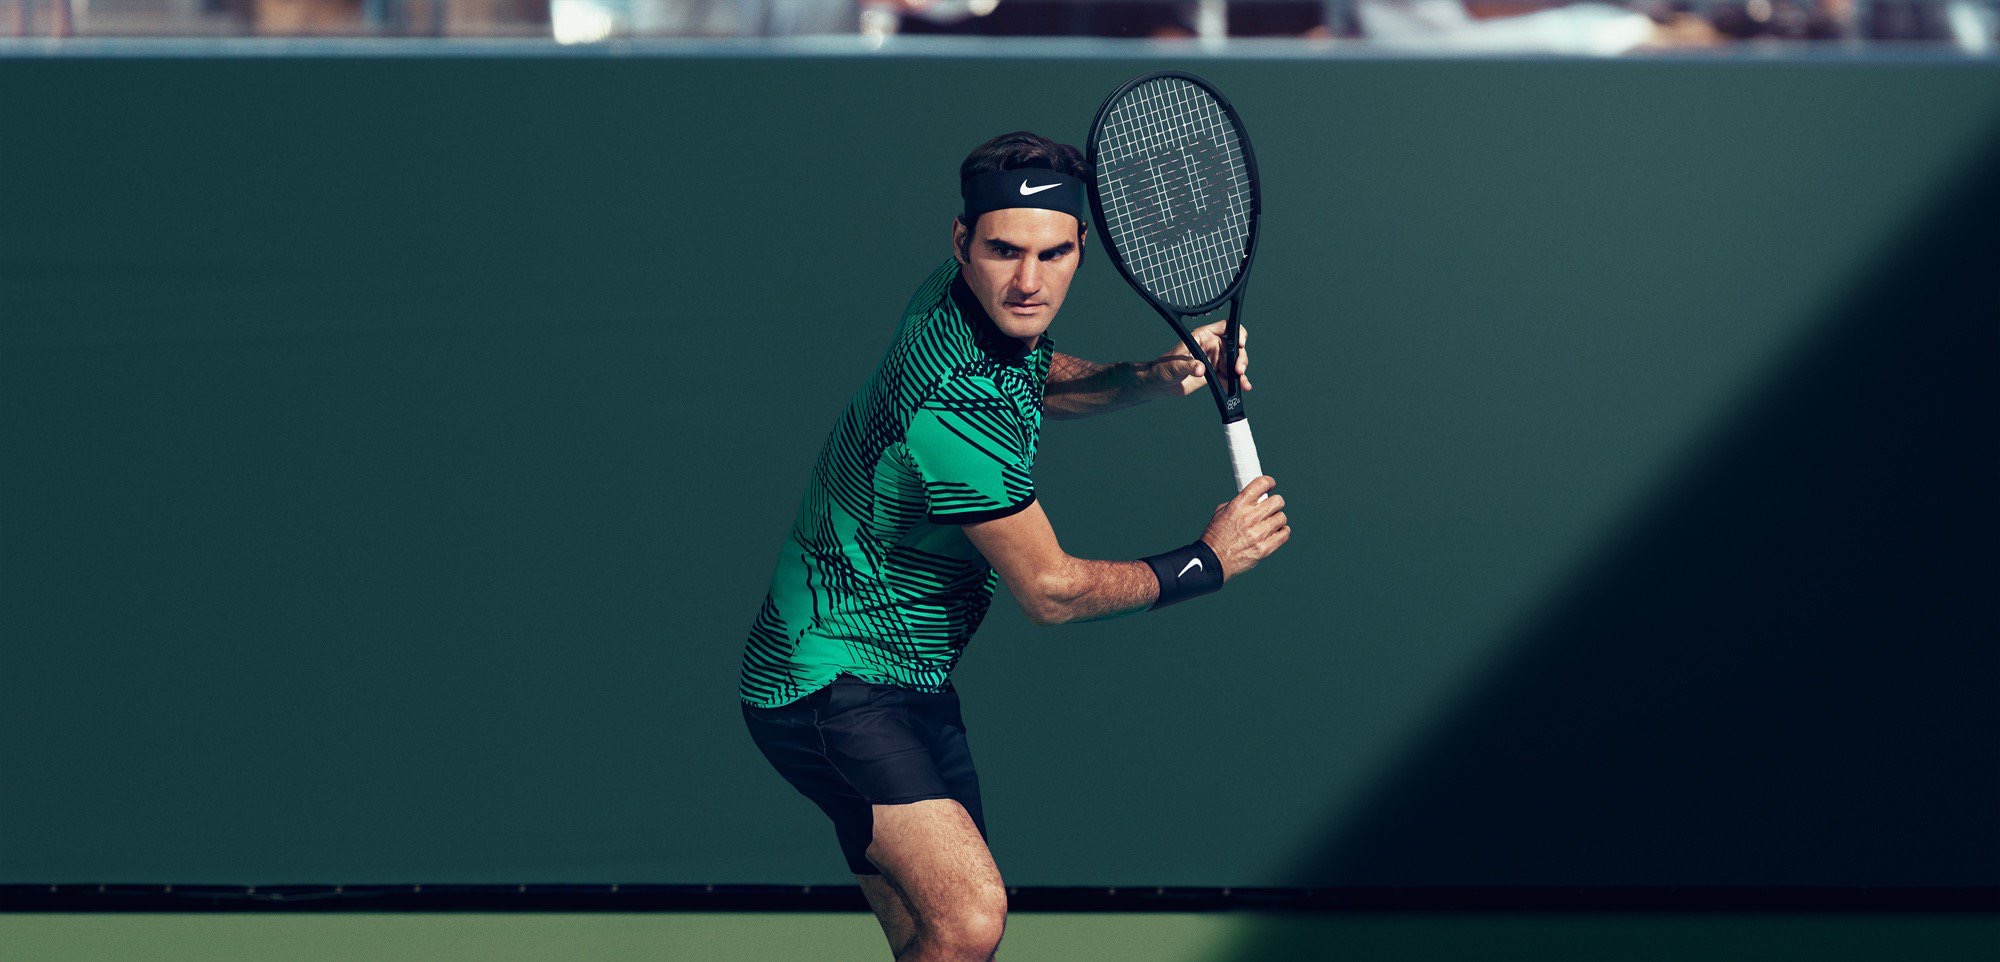 Roger Federer 2017 Indian Wells Nike Outfit